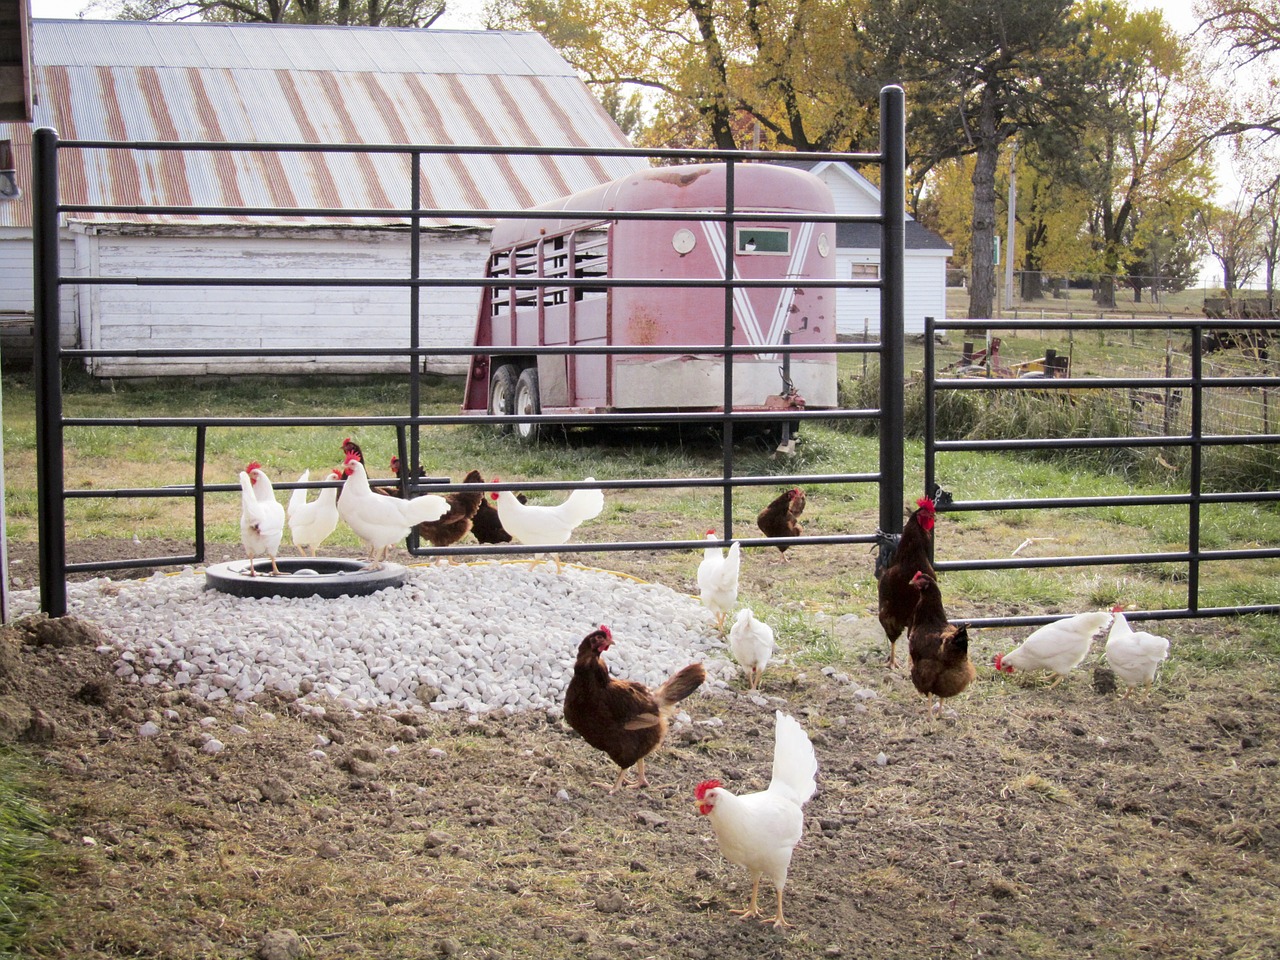 Download free photo of Chickens,farm,hen,animals,birds - from needpix.com